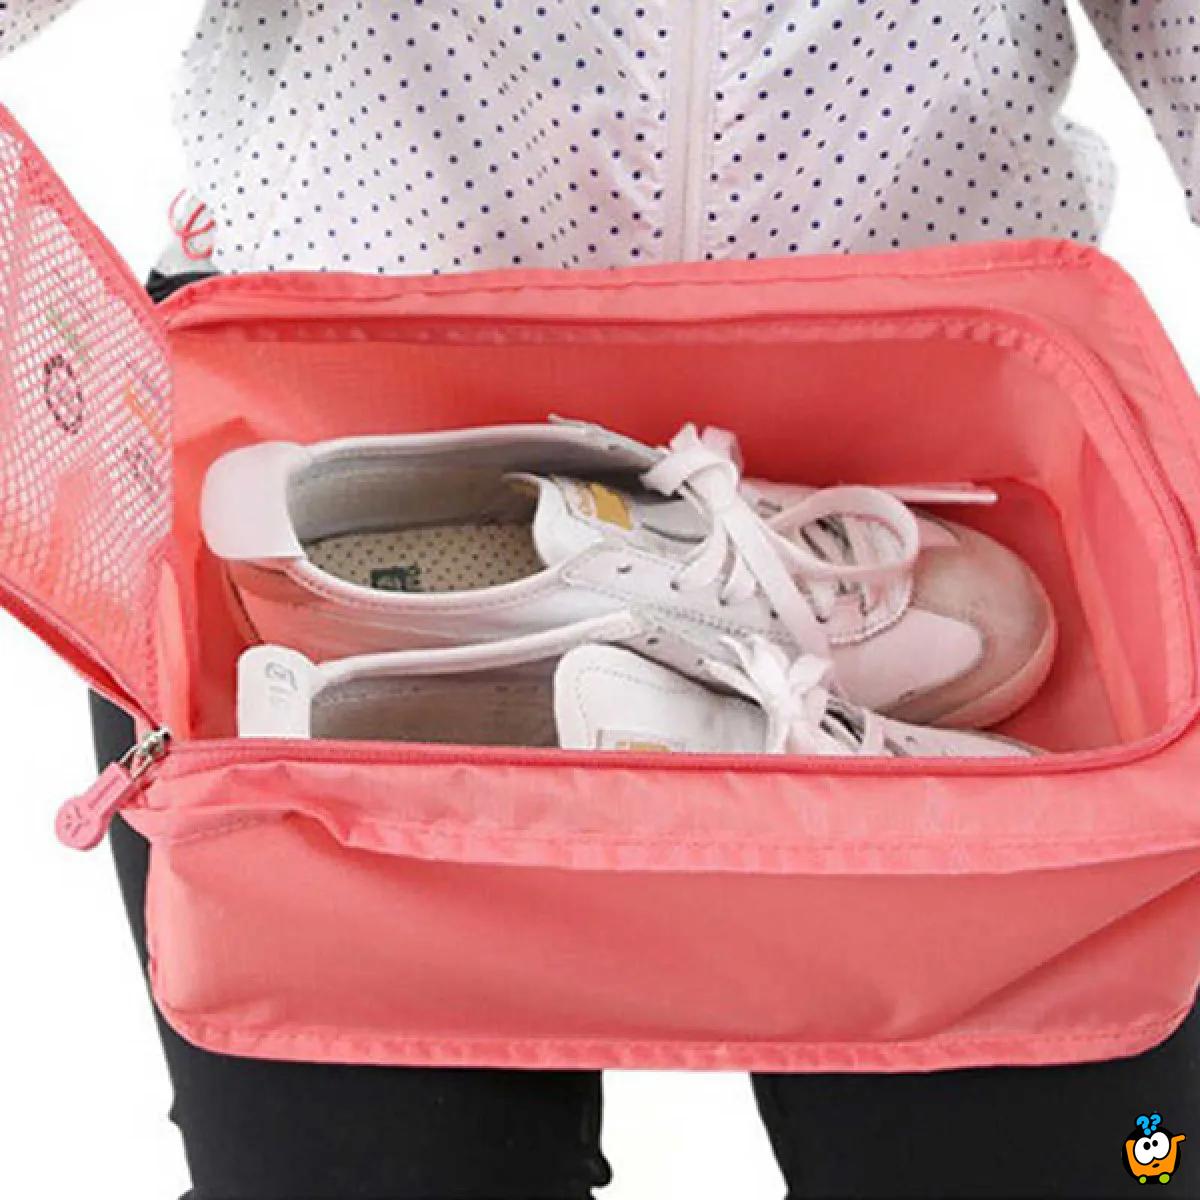 Travel shoes bag - Mala putna torbica za obuću i ostale stvari